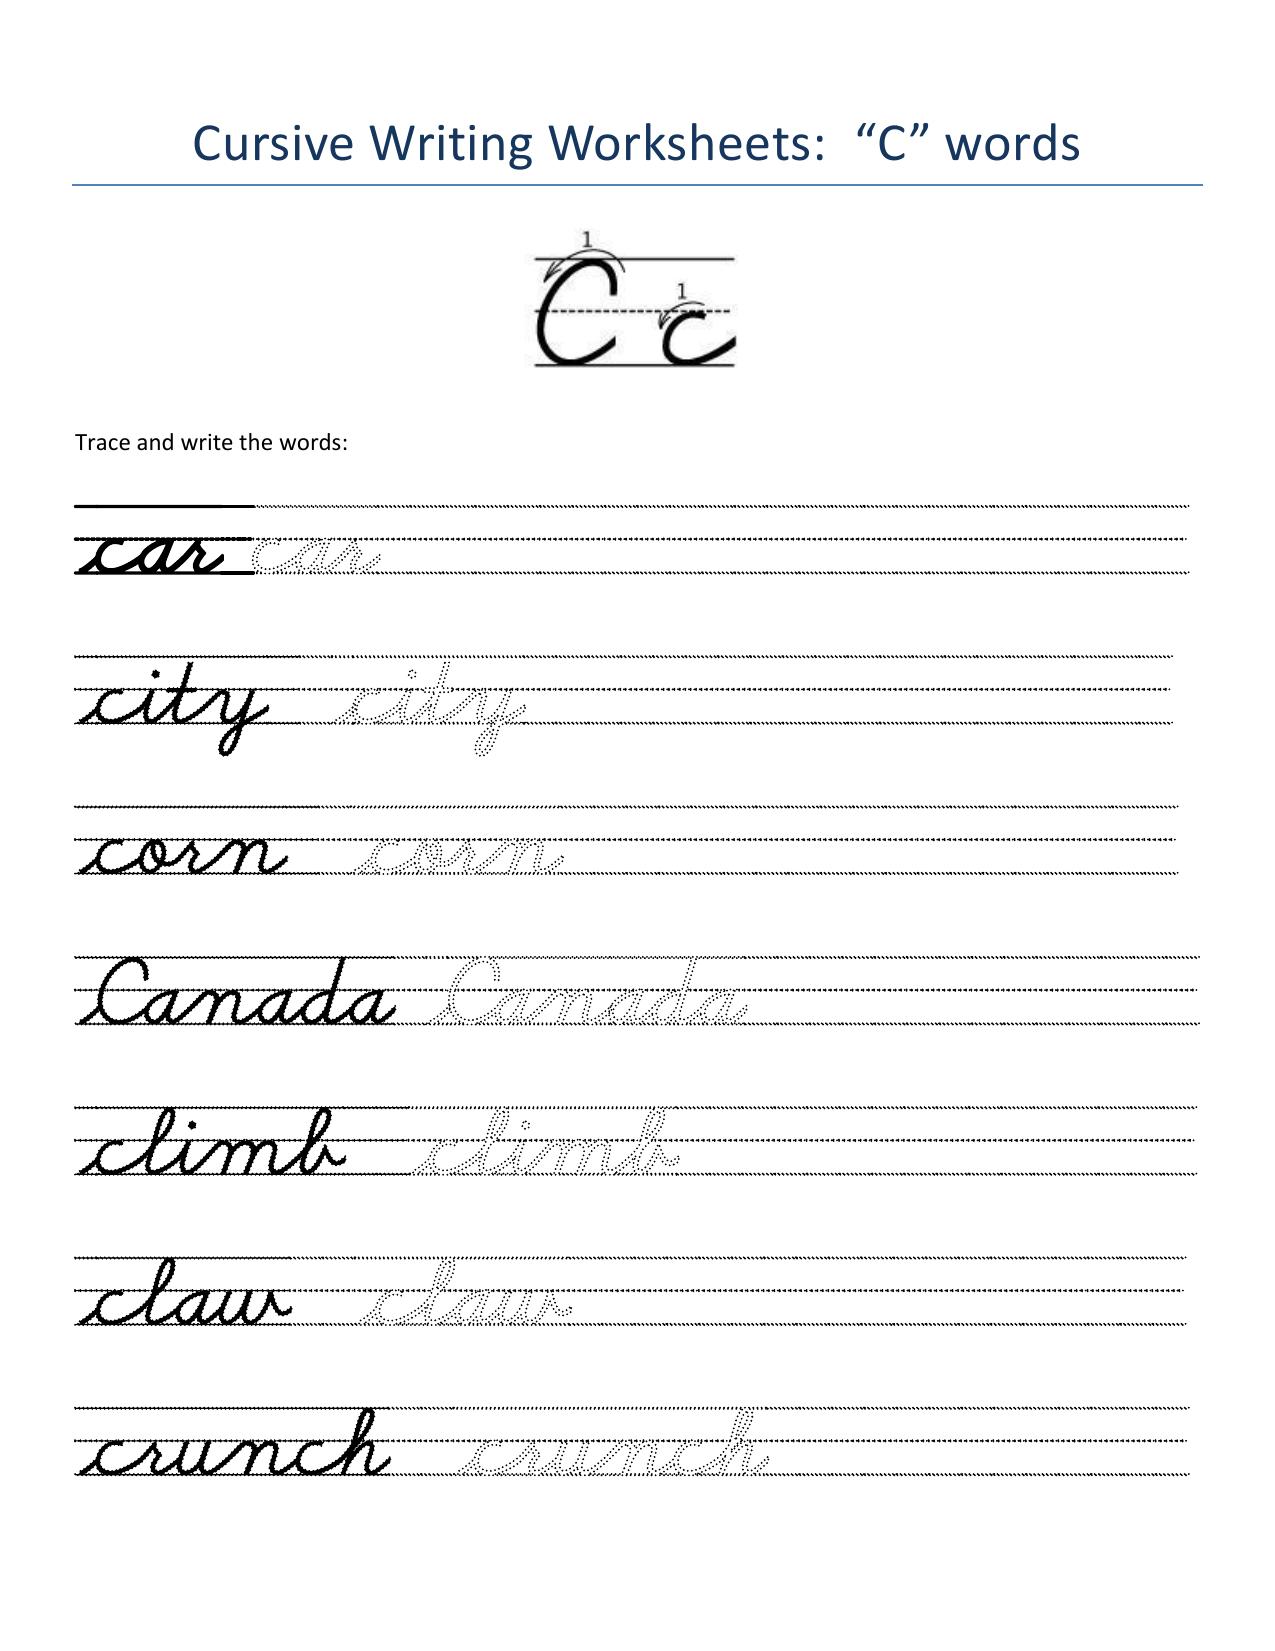 Cursive Words Worksheets - Page 3